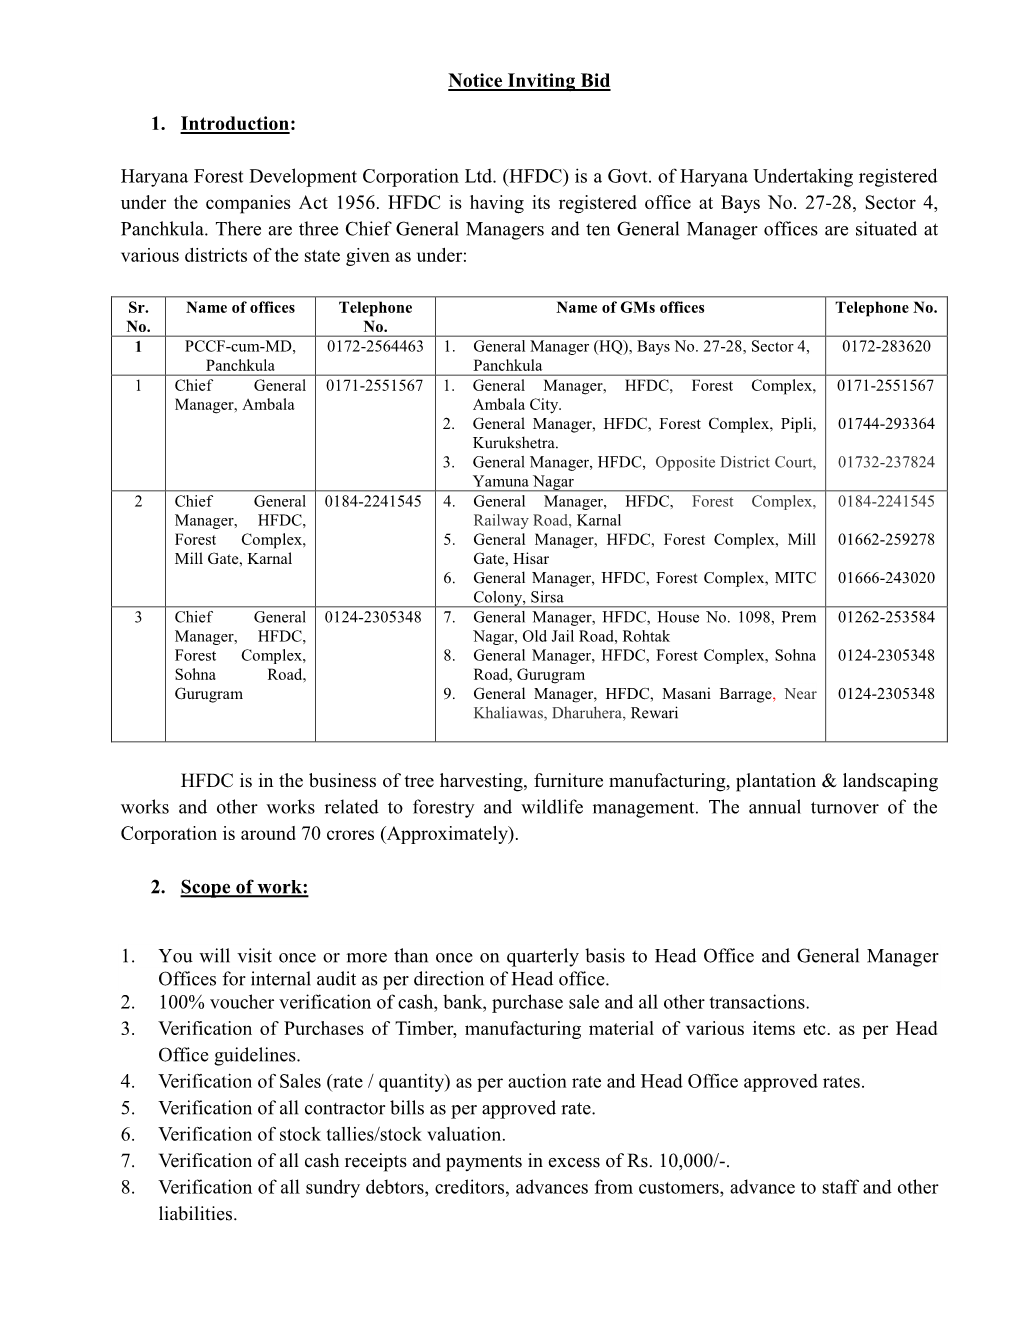 Haryana Forest Development Corporation Ltd. (HFDC) Is a Govt